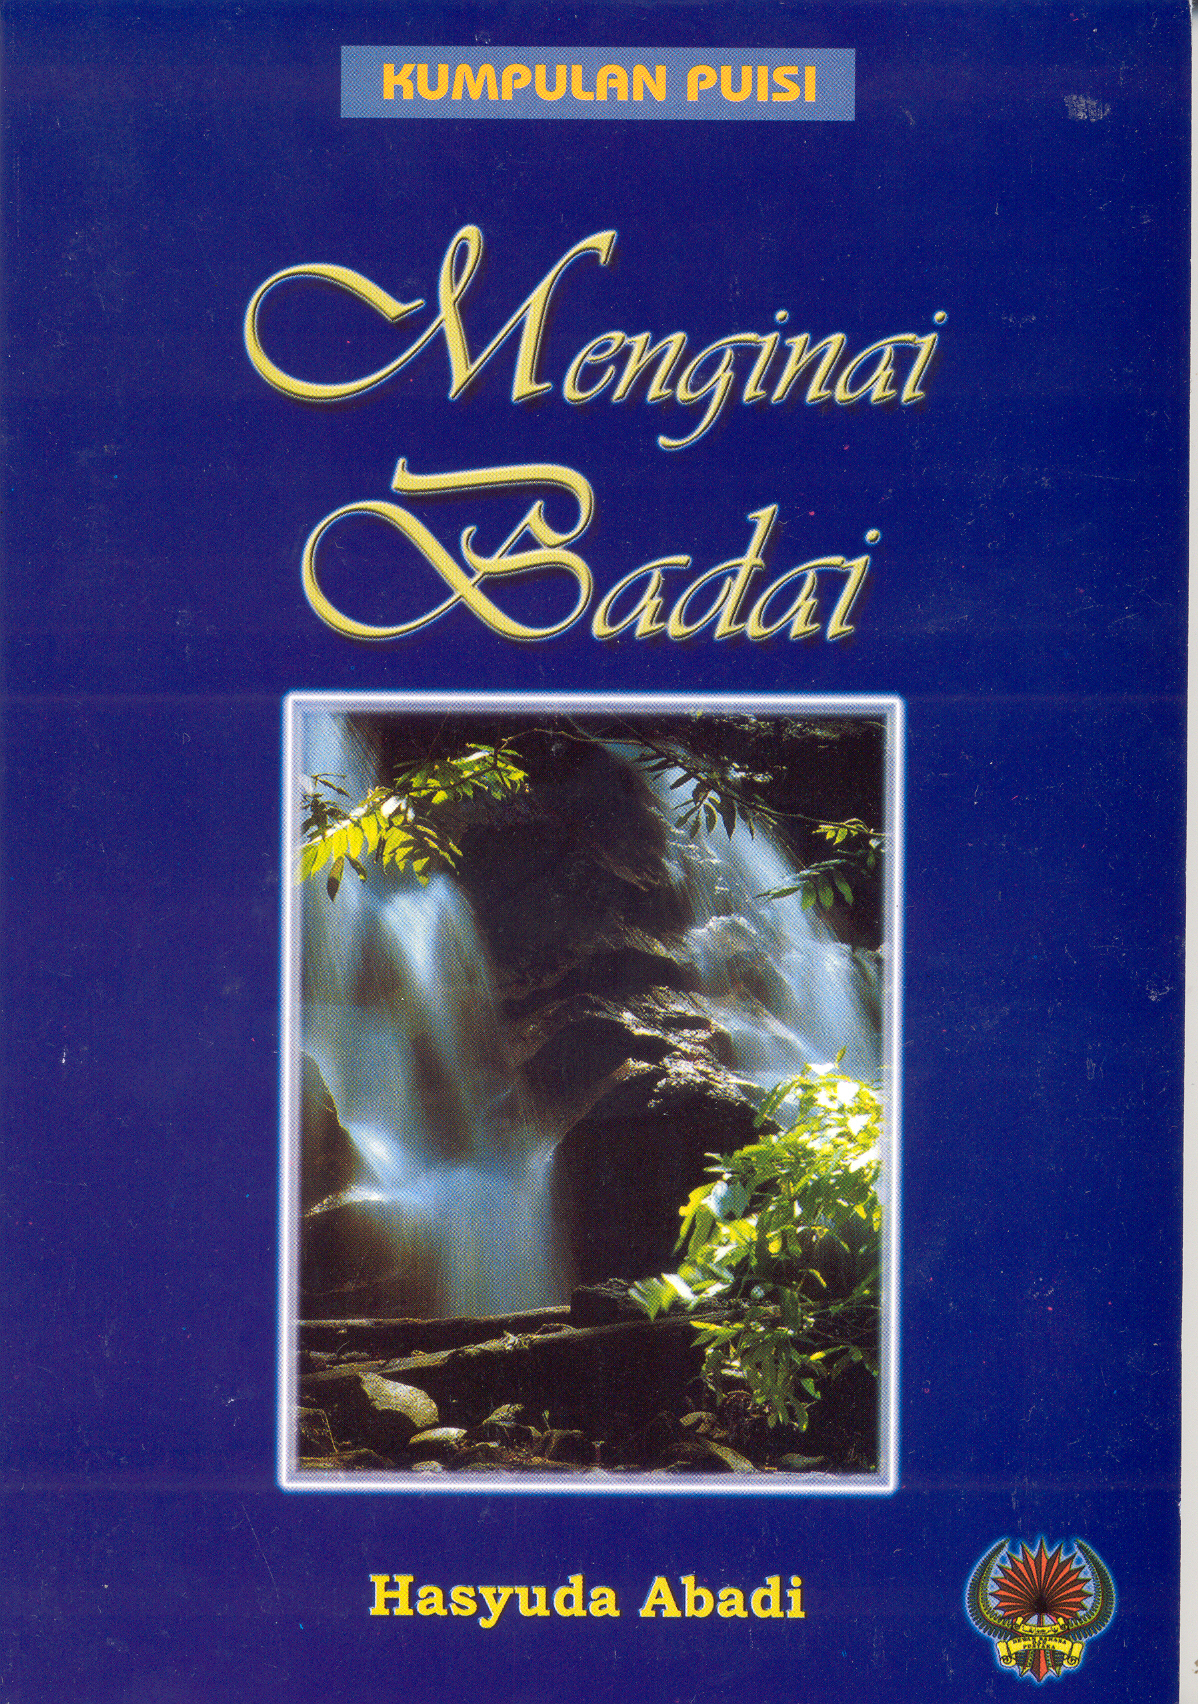 MENGINAI BADAI DBP (2004)- Klik untuk mengikuti puisi-puisi Hasyuda Abadi